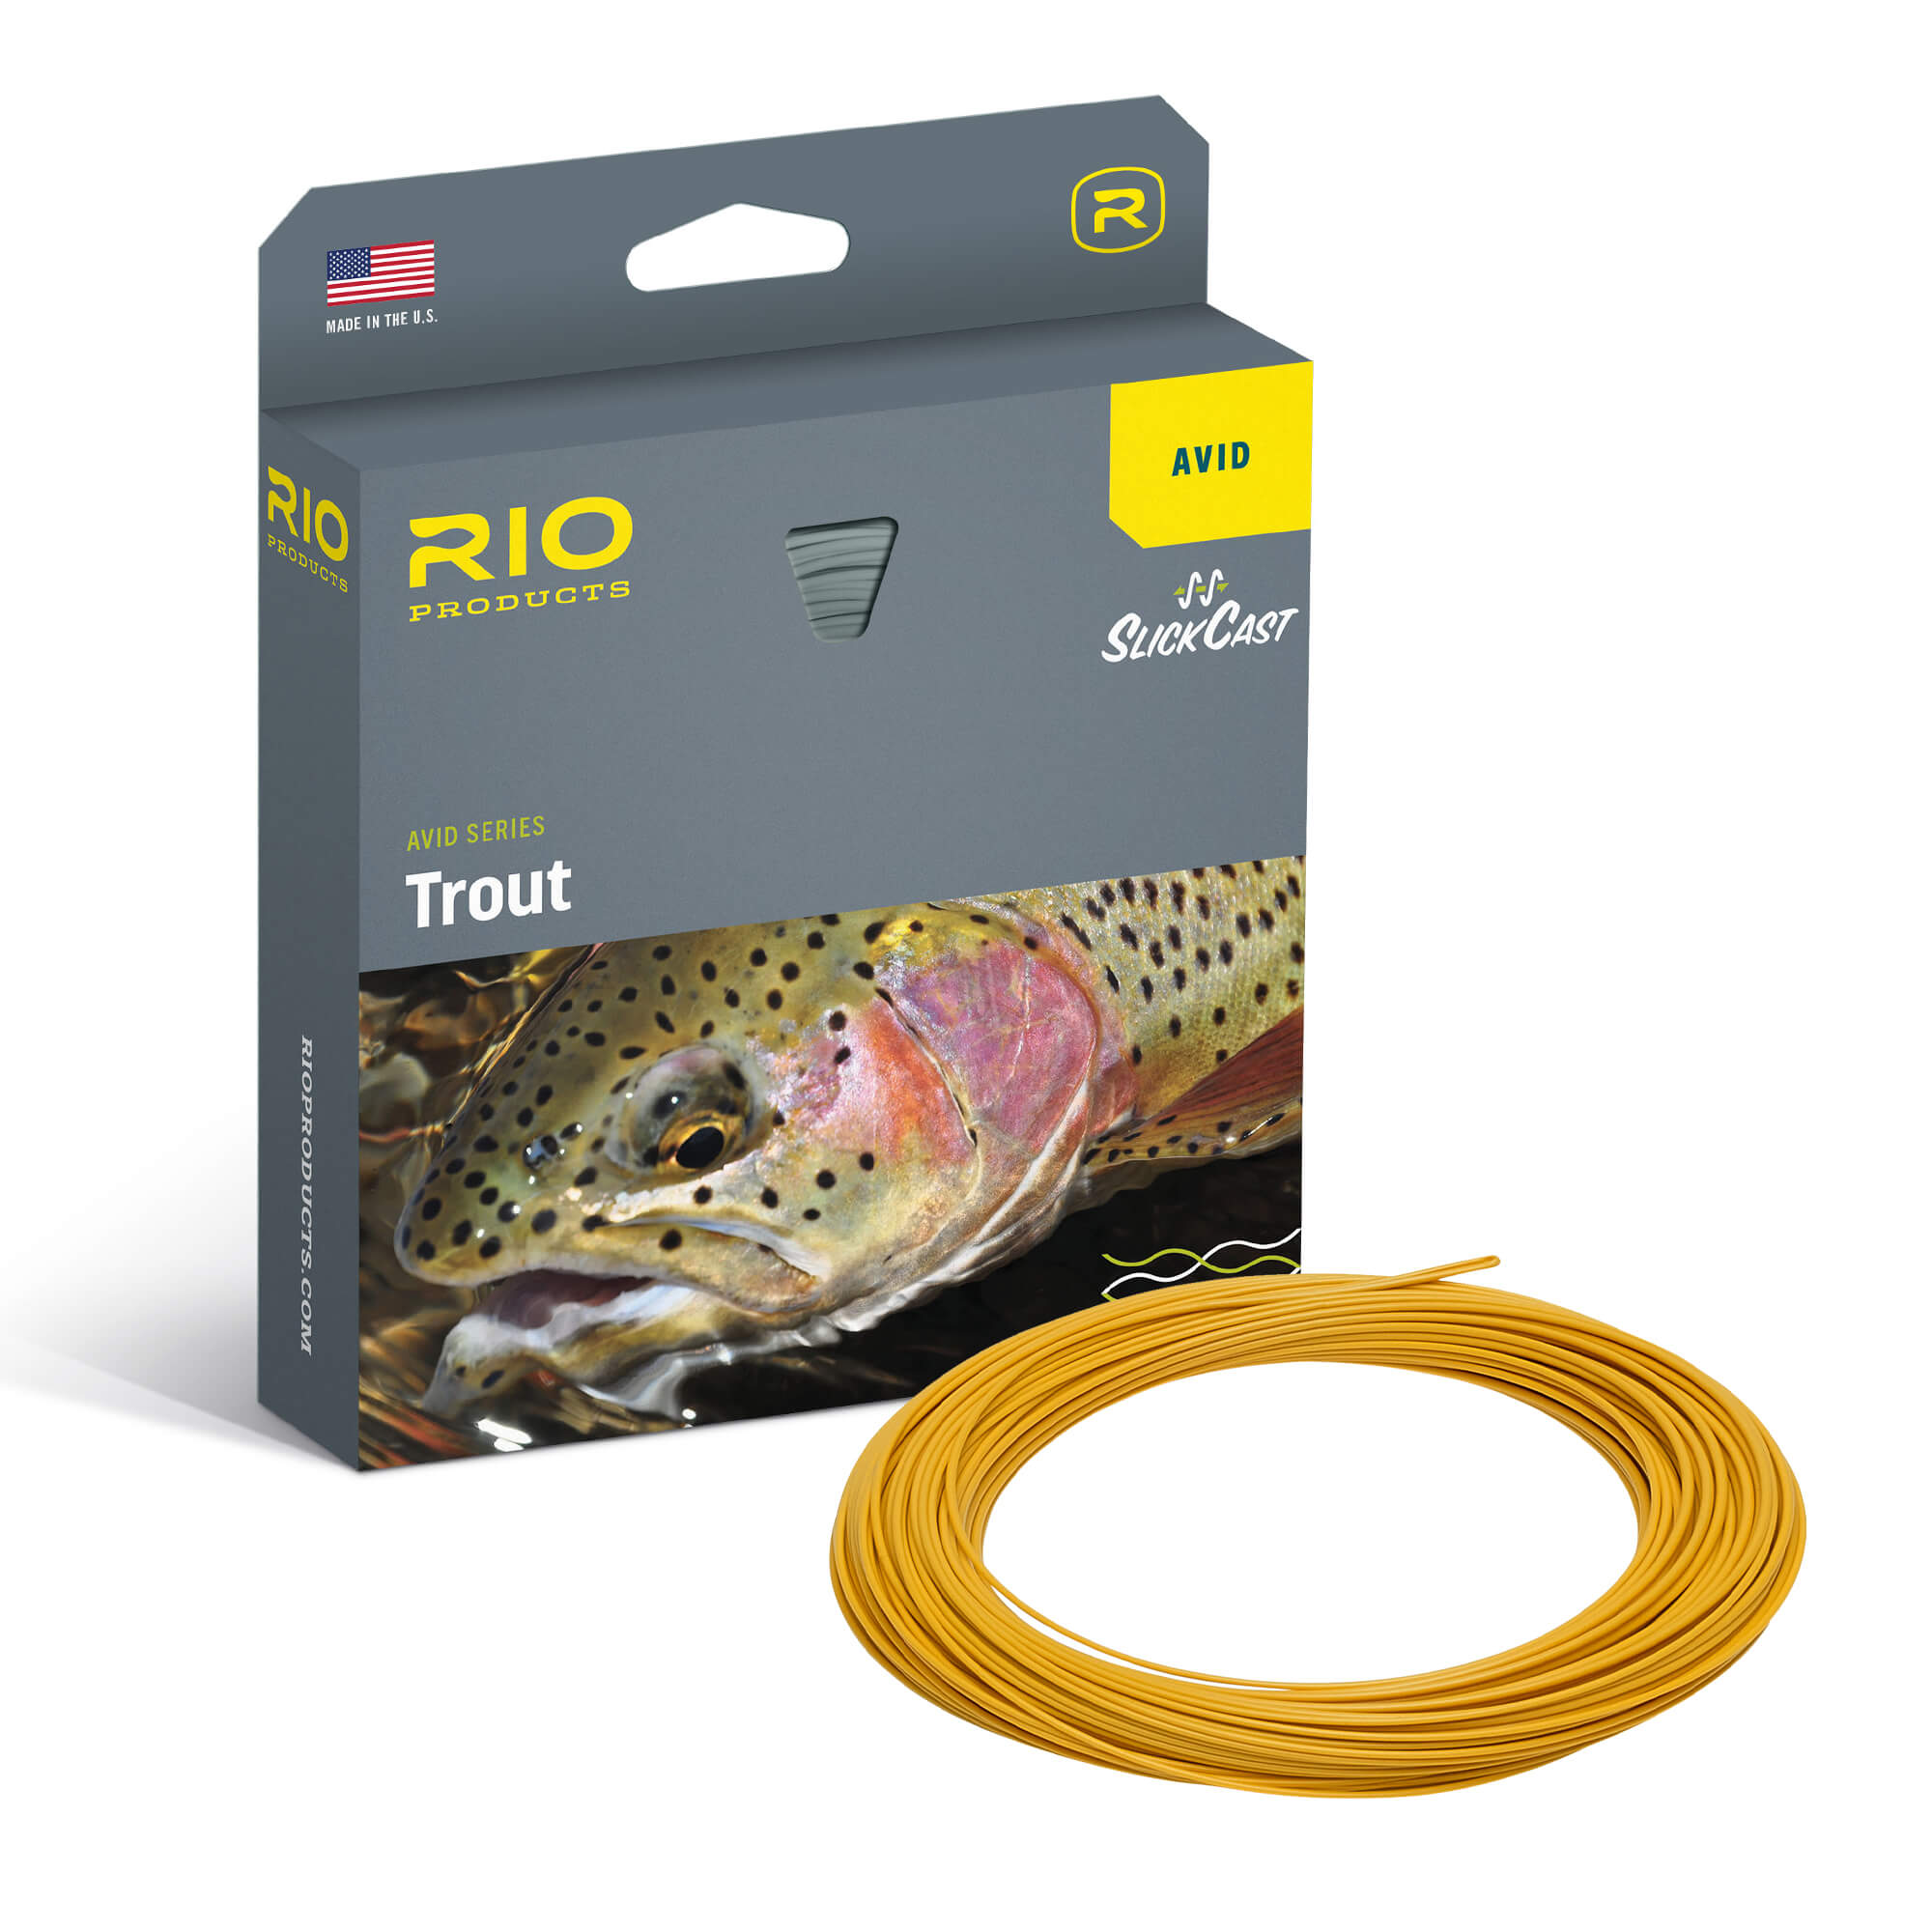 Avid RIO Gold Fly Line – Guide Flyfishing, Fly Fishing Rods, Reels, Sage, Redington, RIO